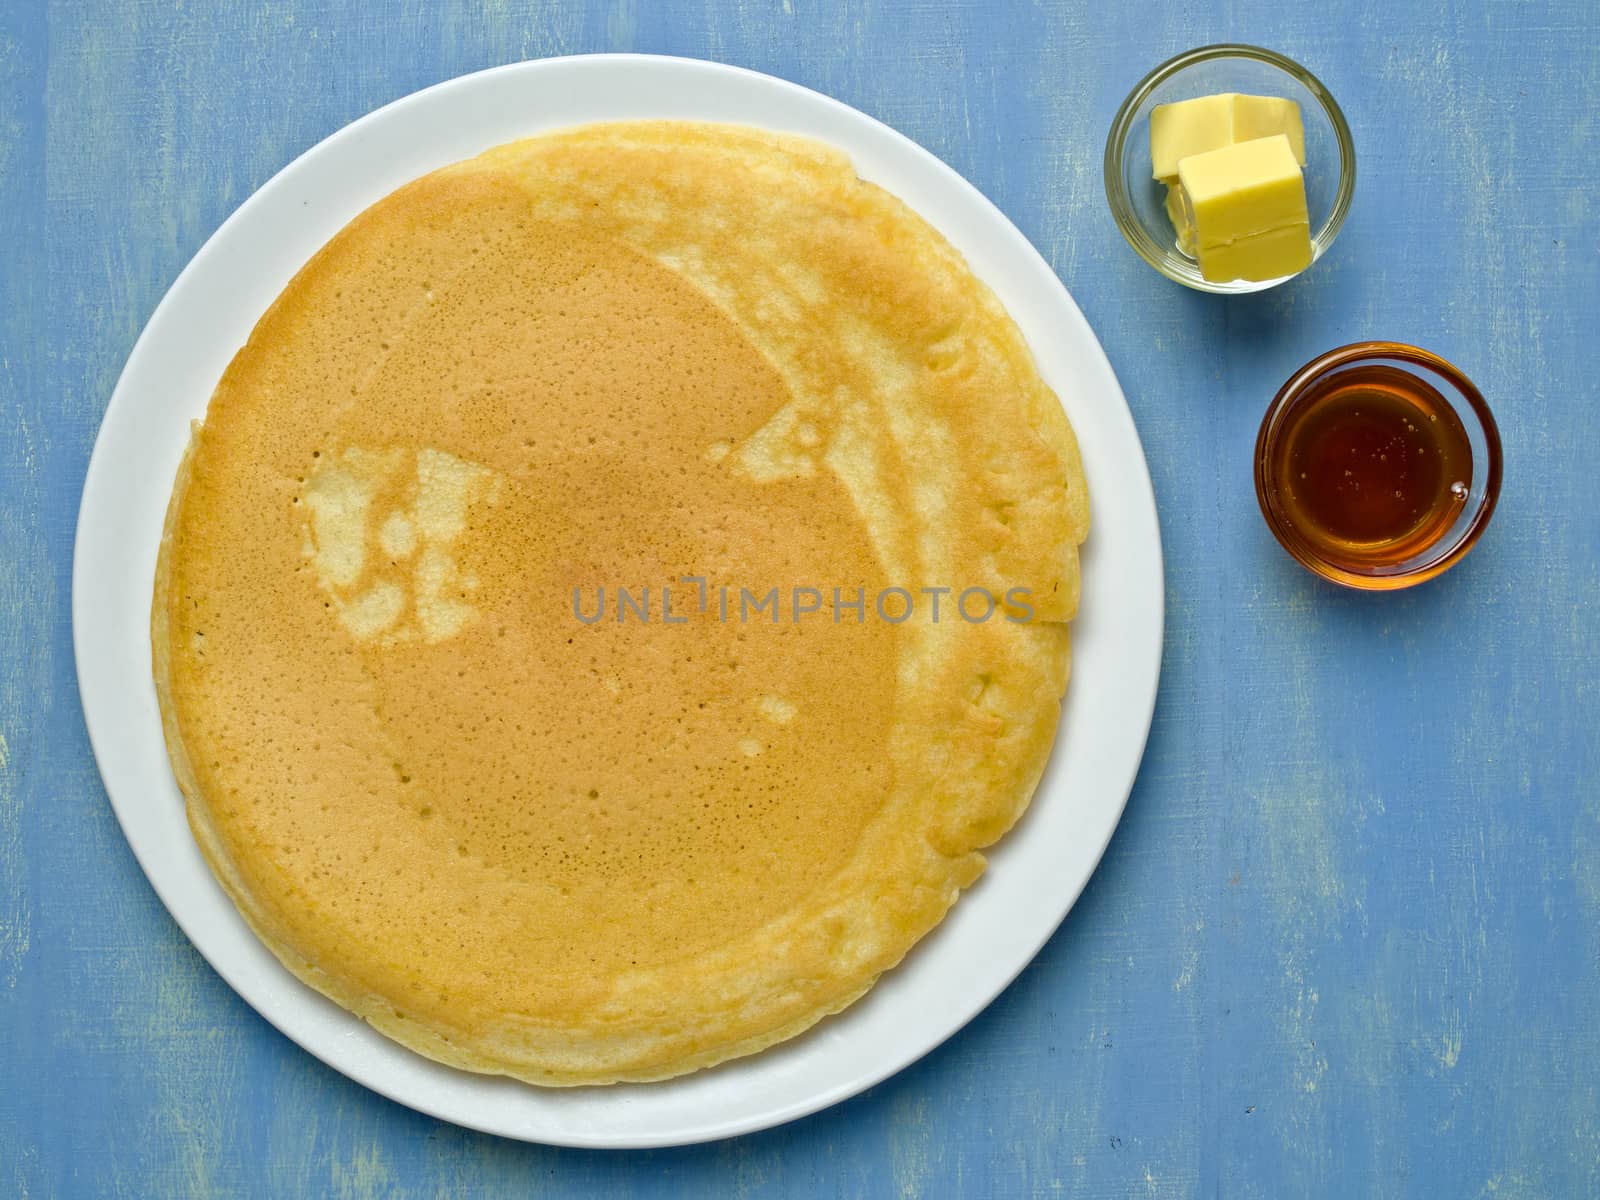 rustic large homemade pancake by zkruger